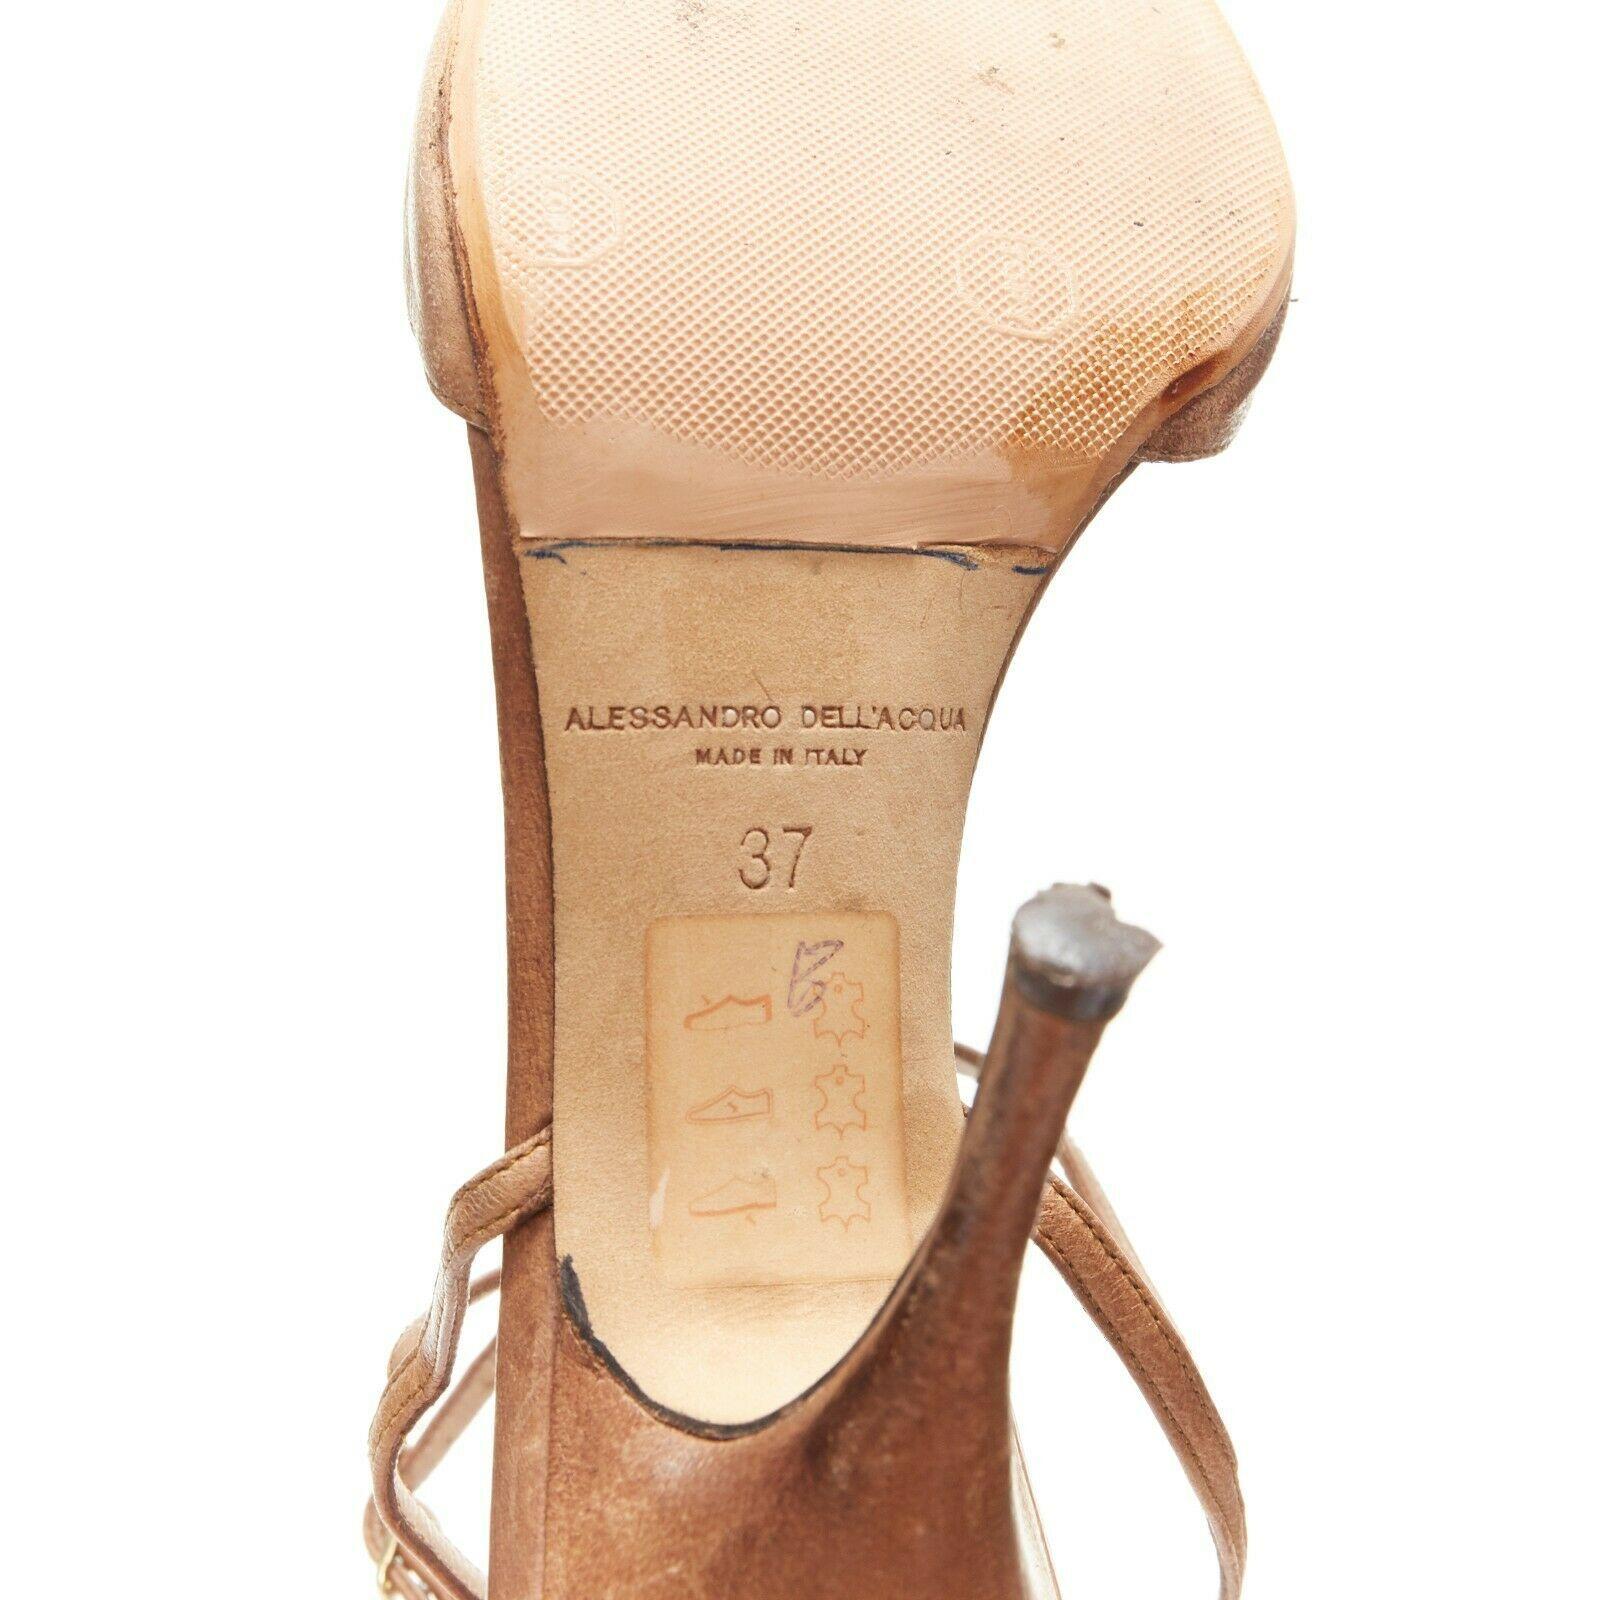 ALESSANDRO DELL ACQUA leather open-toe high heel sandal exotic bird feather EU37 4